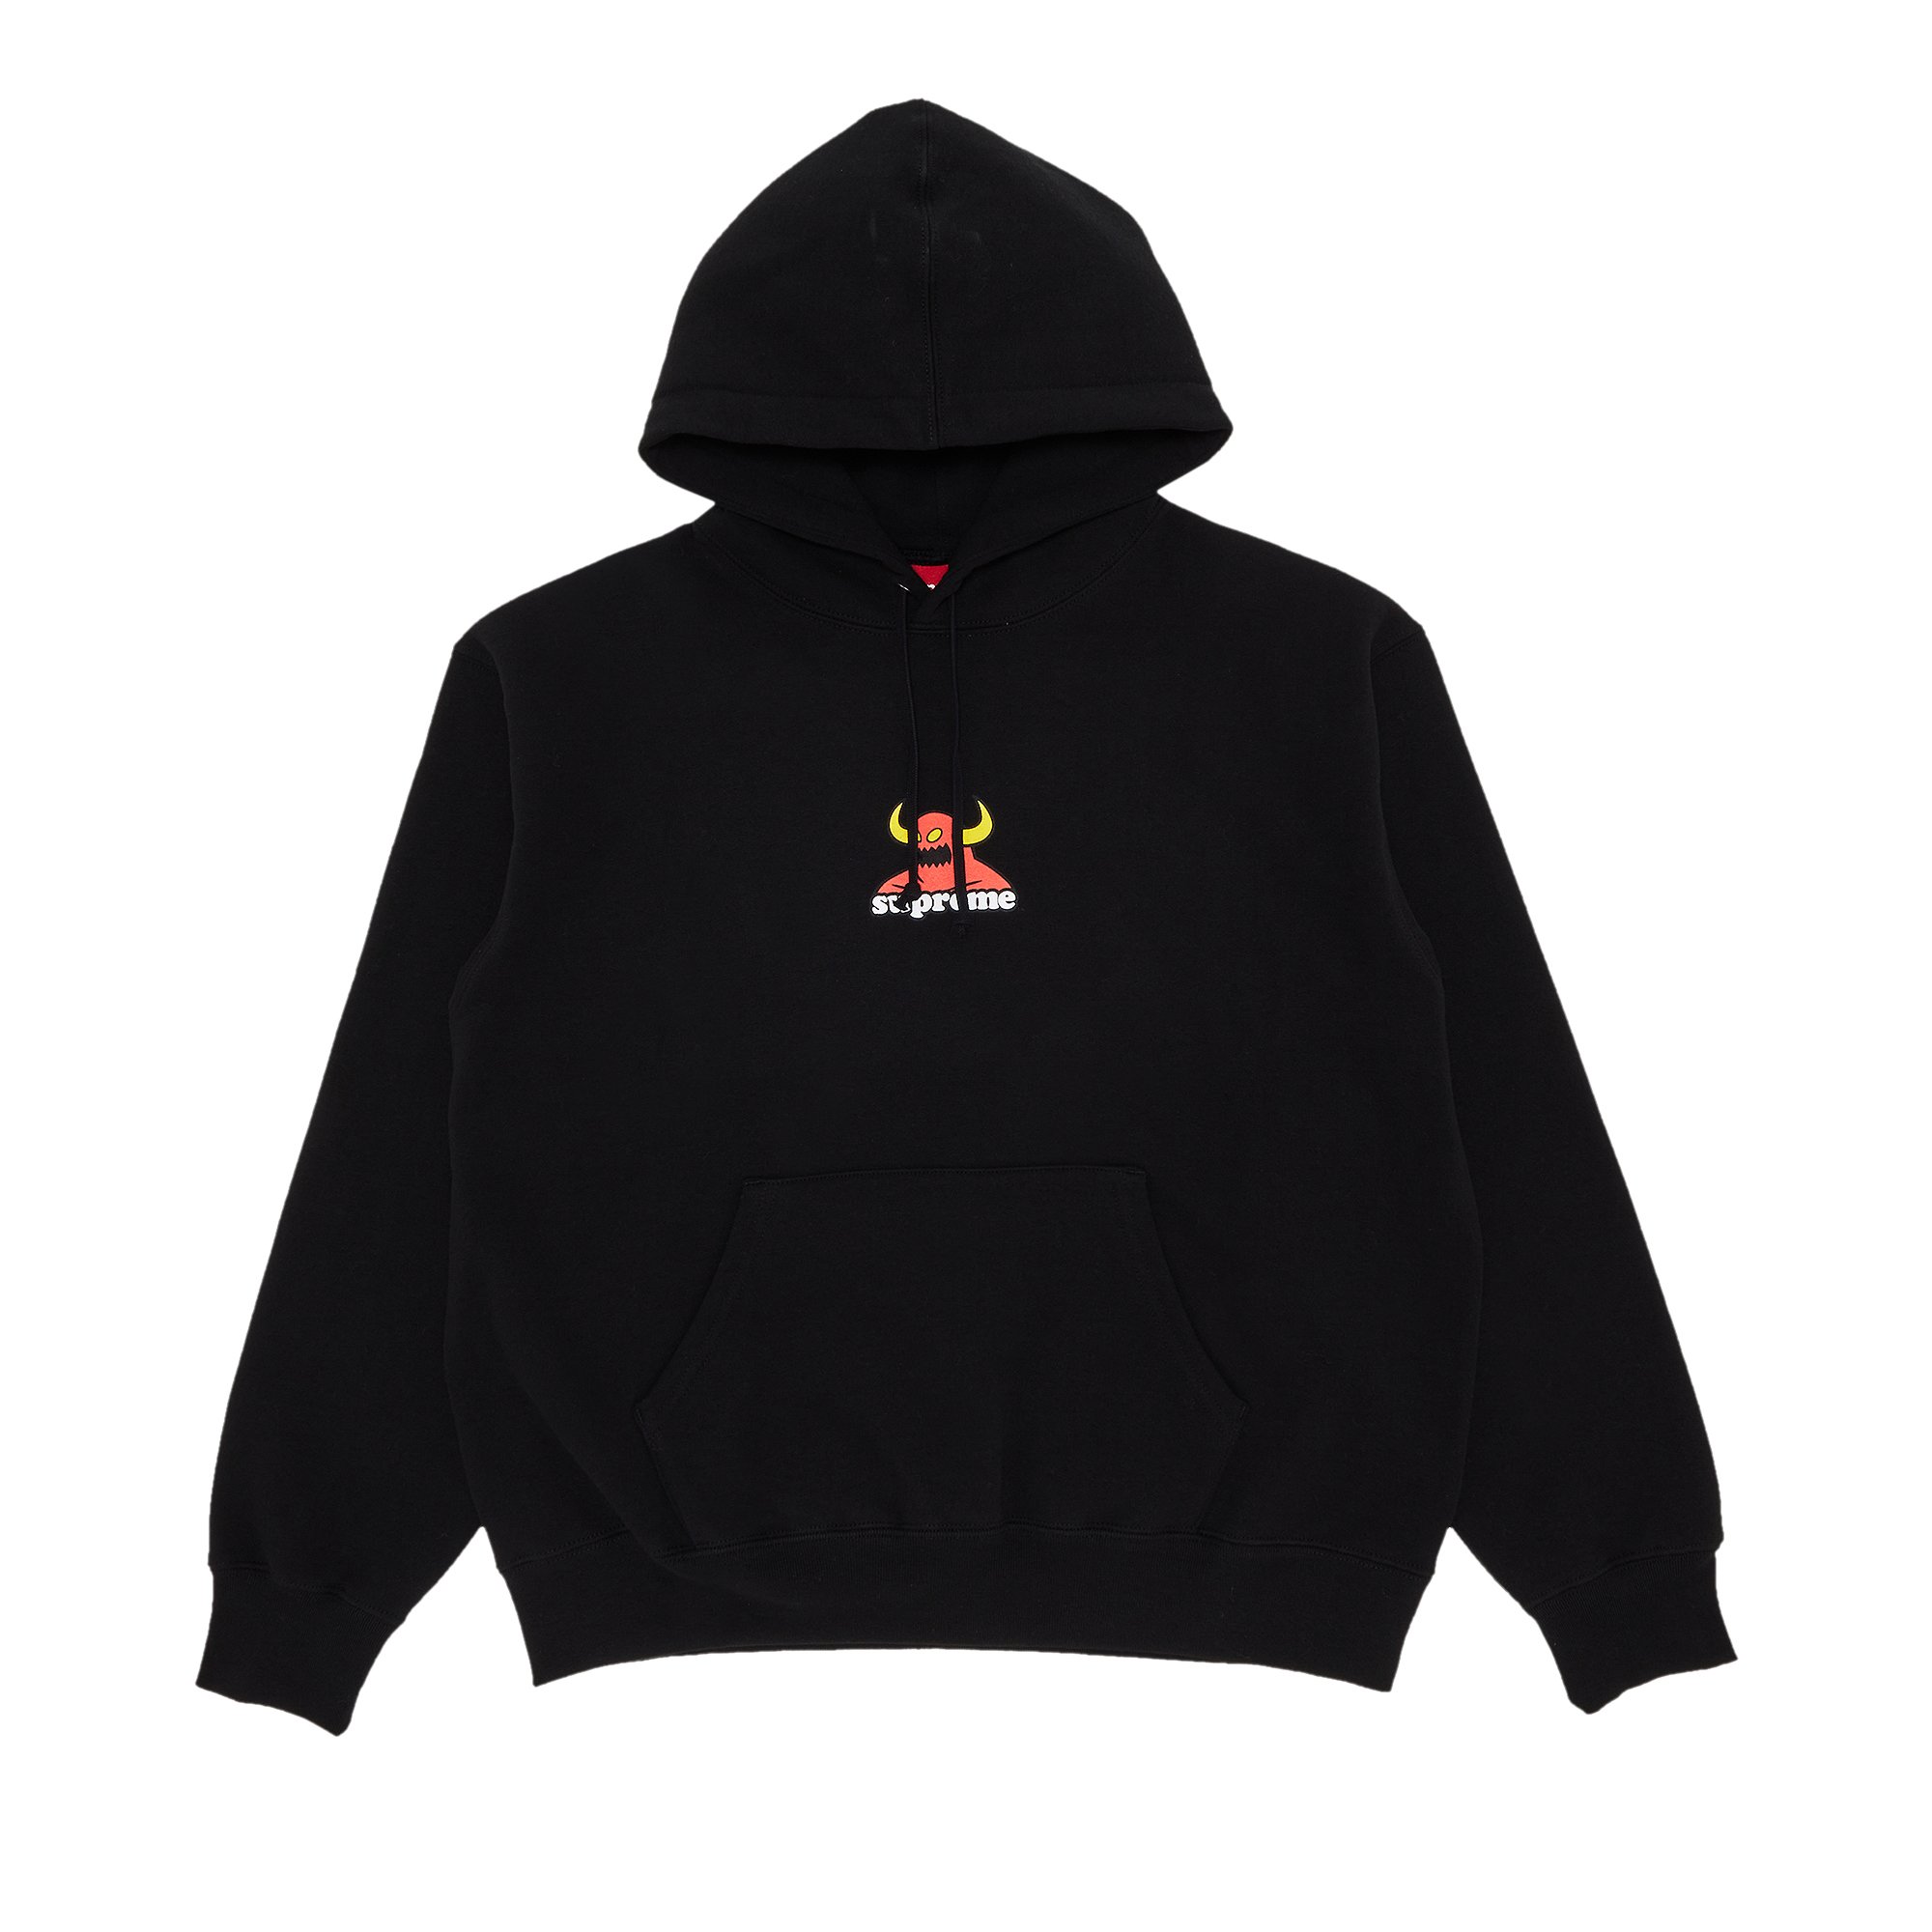 Supreme x Toy Machine Hooded Sweatshirt 'Black'